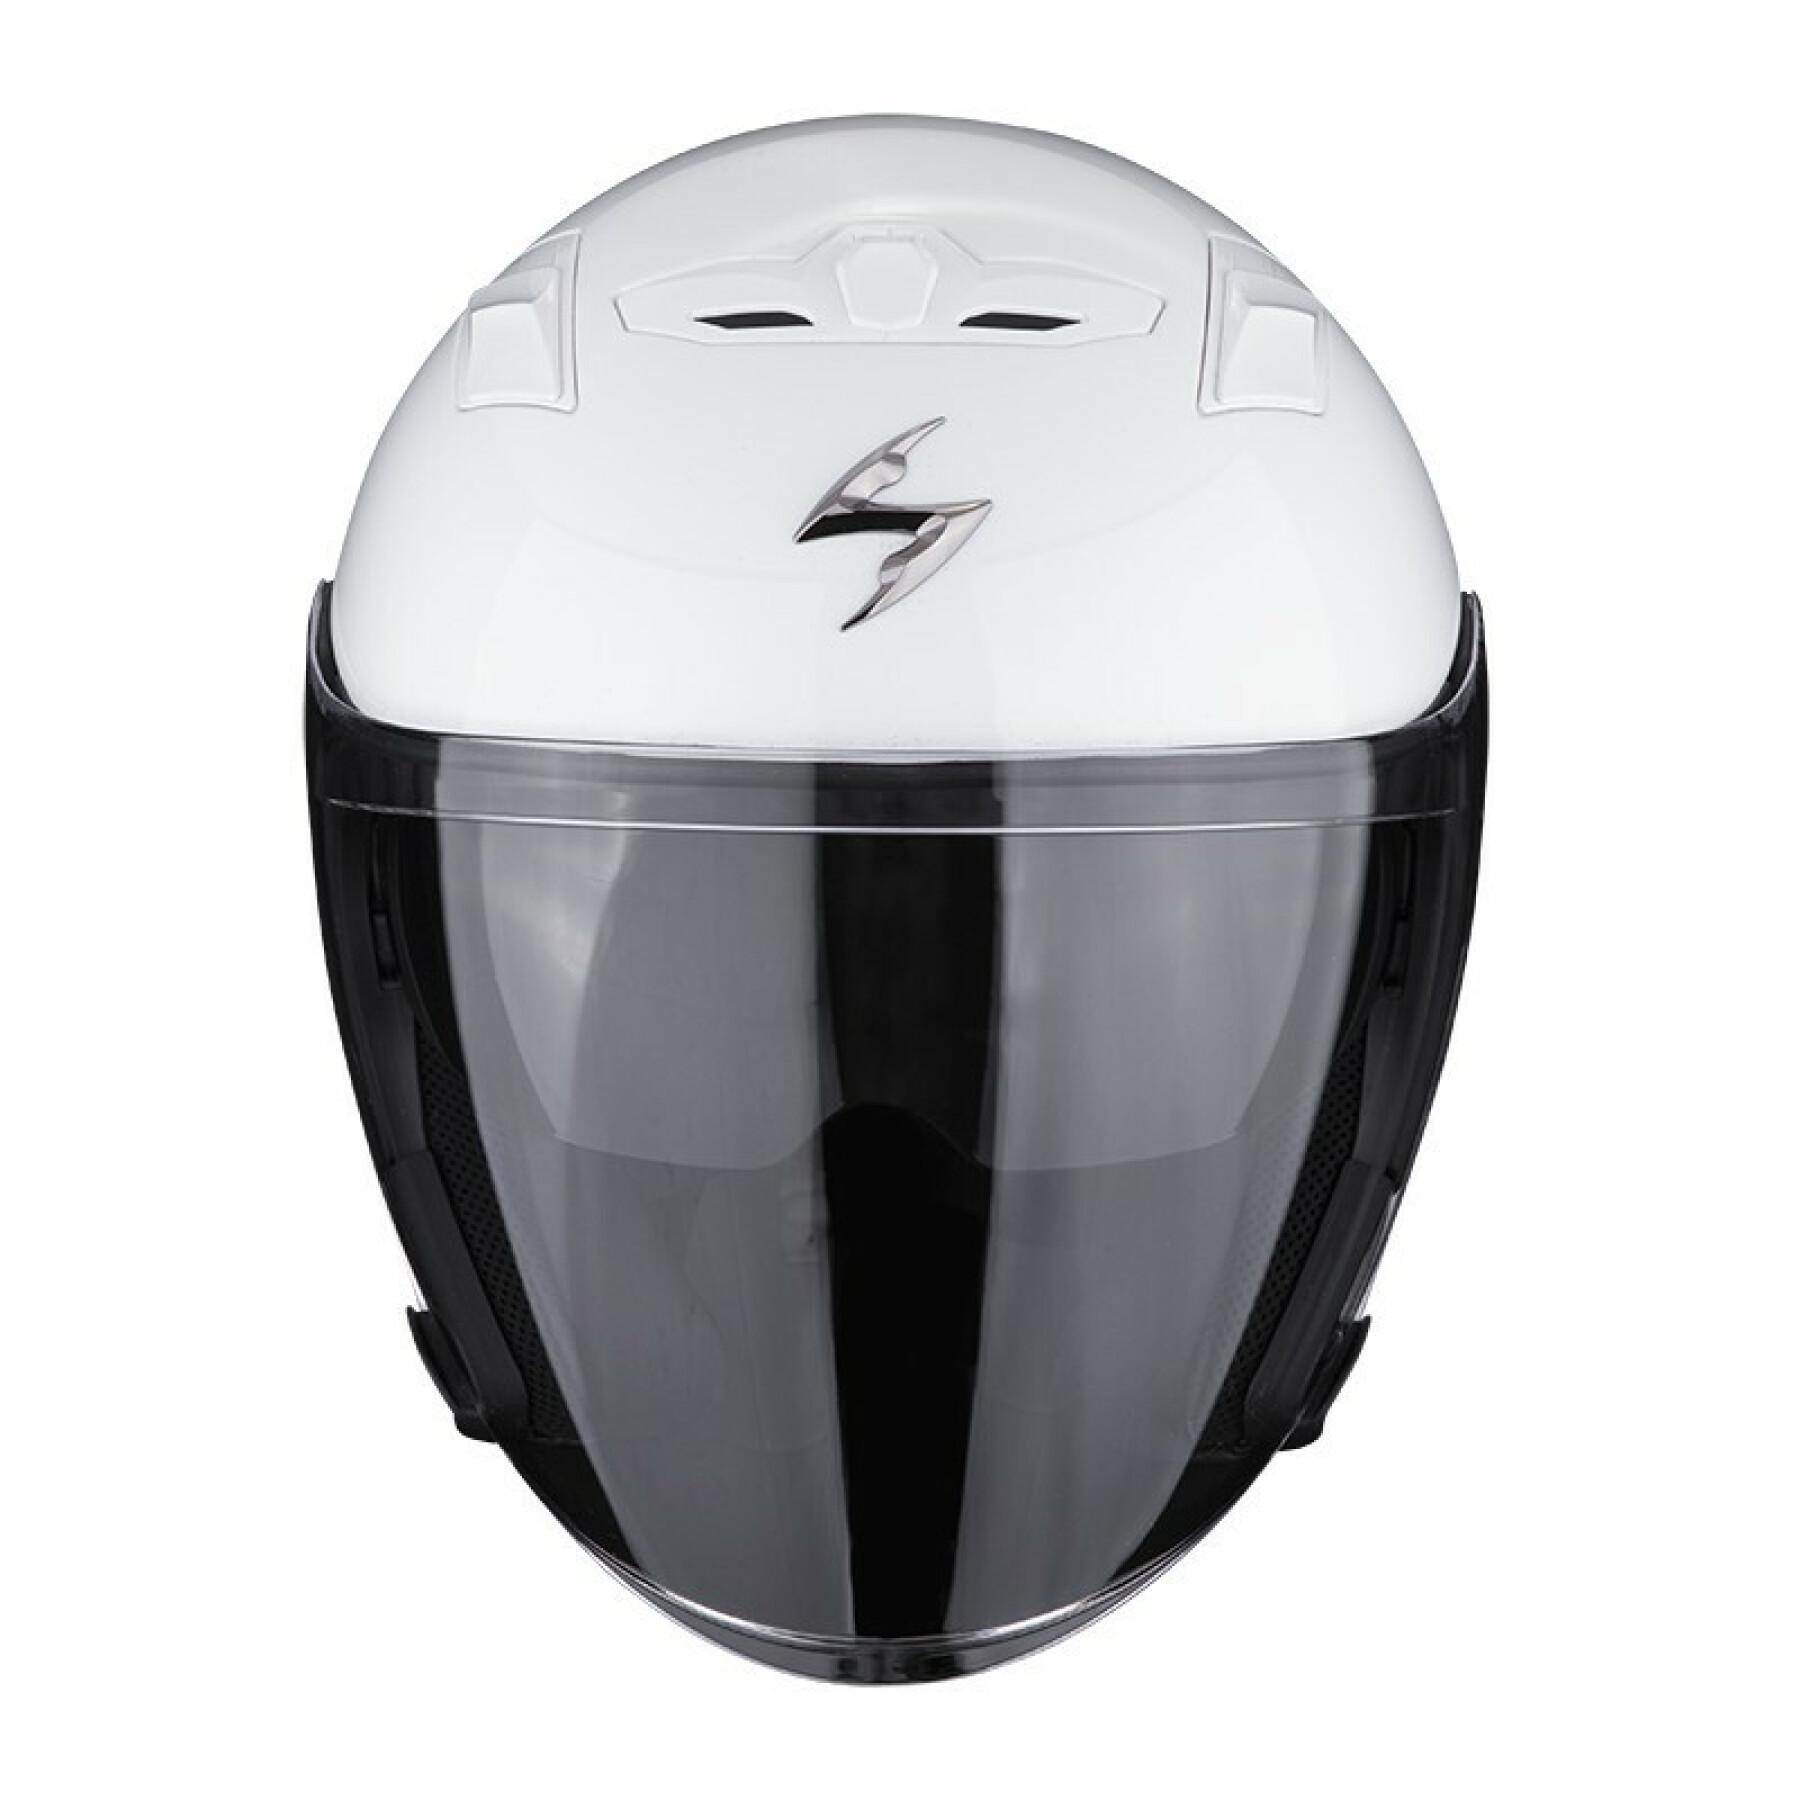 Jet helmet Scorpion Exo-230 SOLID